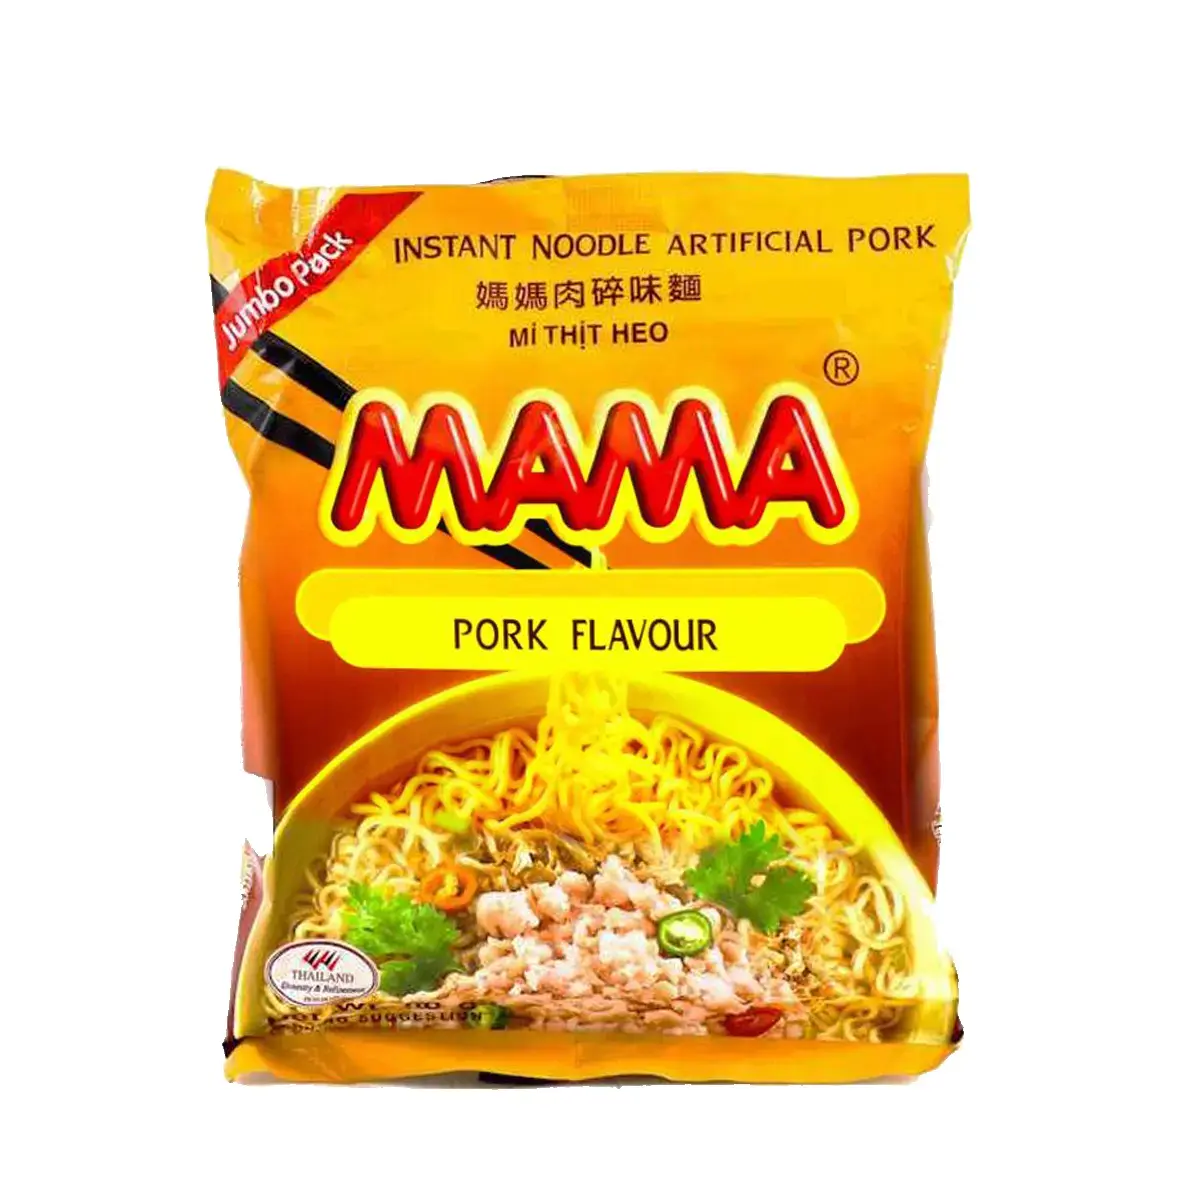 Buy Noodle & Rice Paper Online